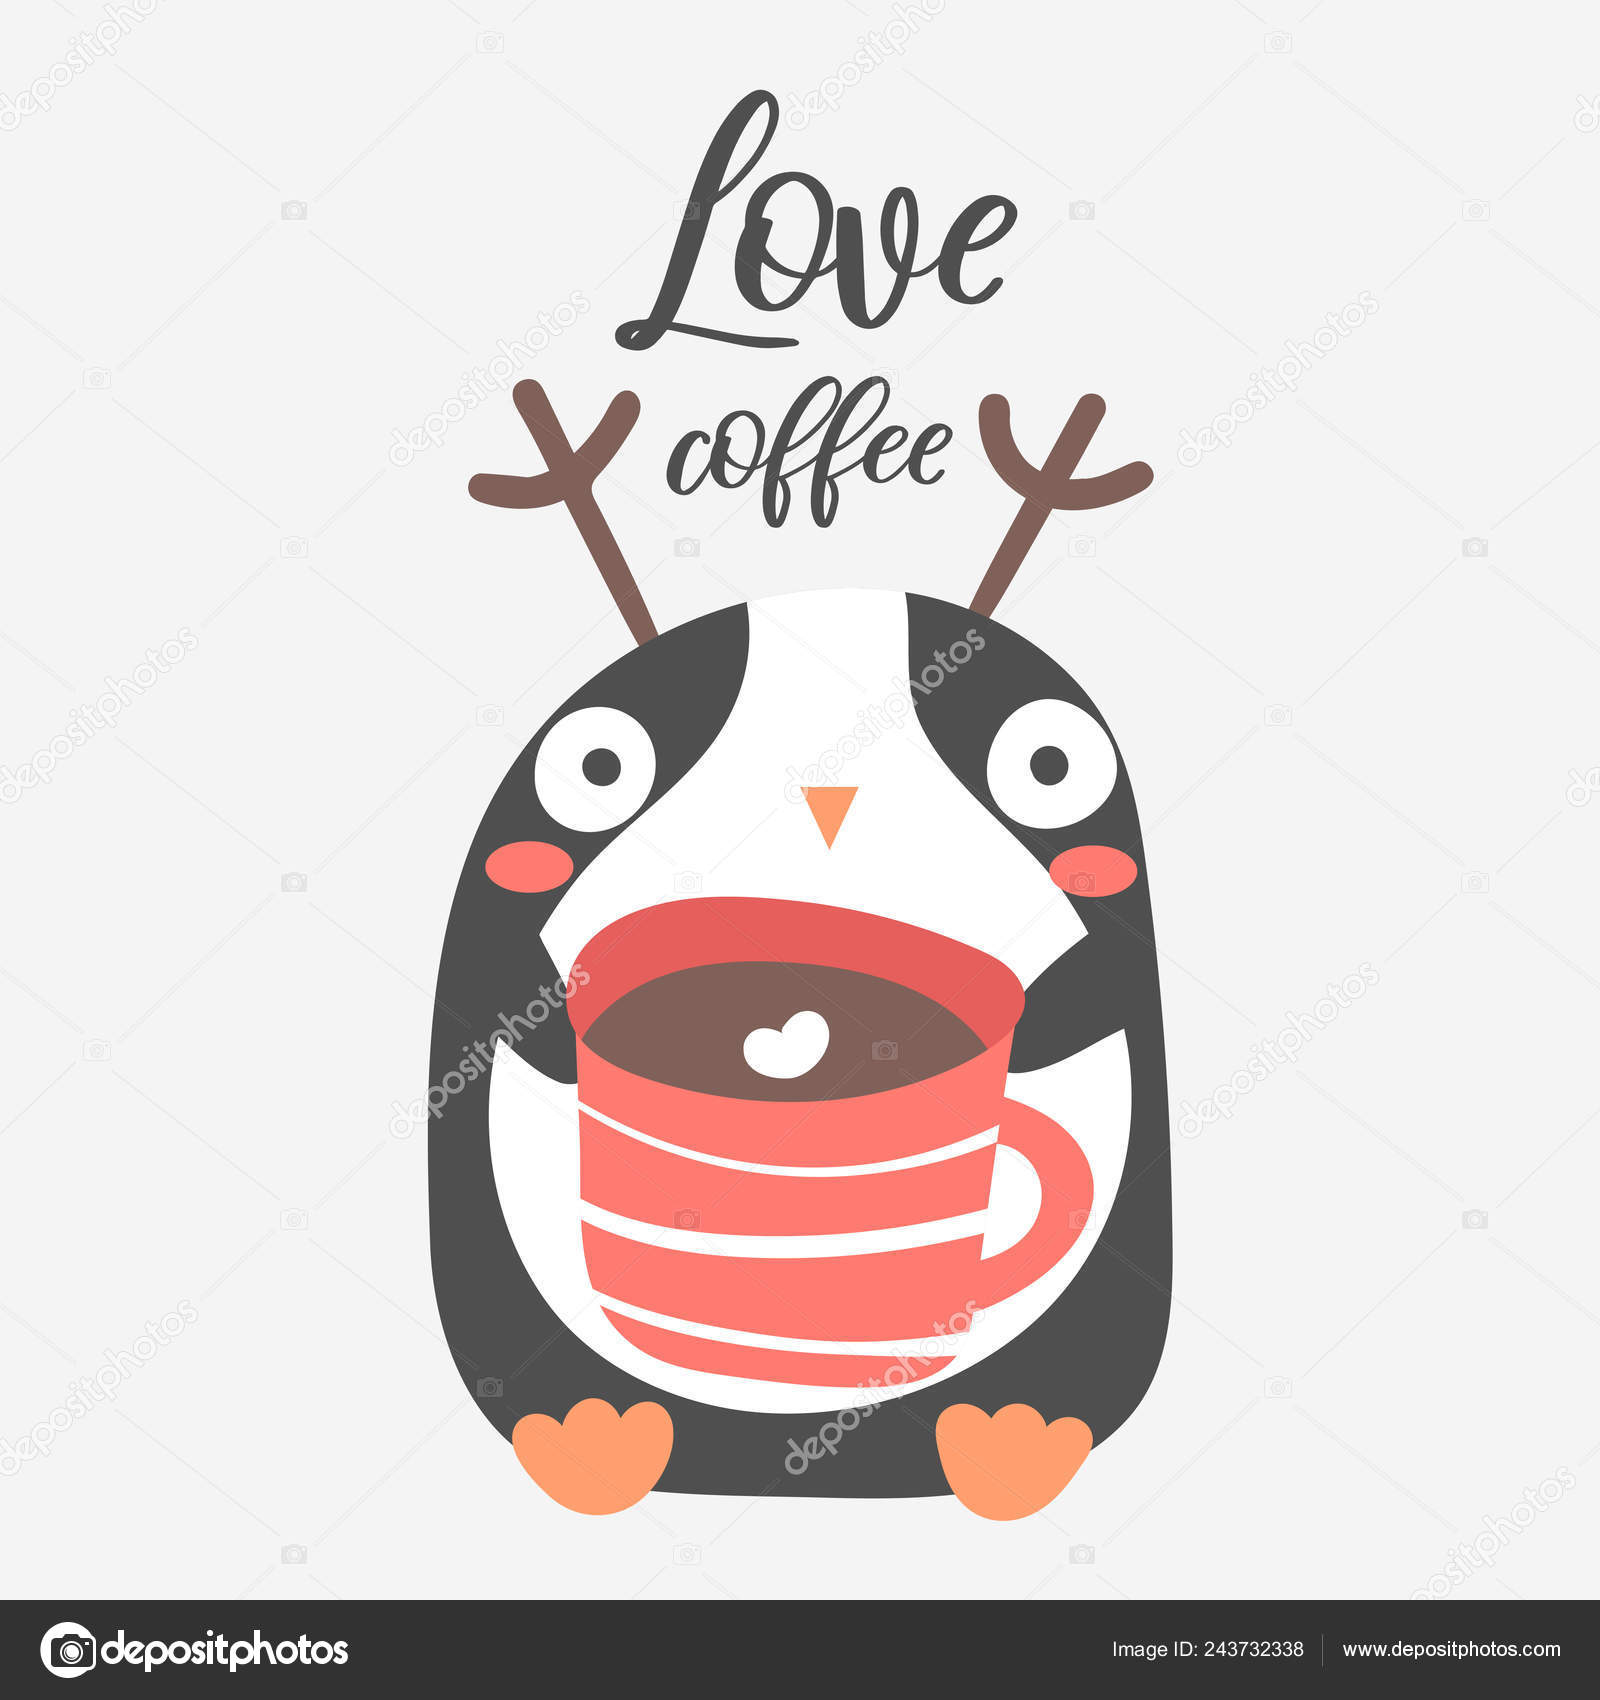 https://st4.depositphotos.com/5020929/24373/v/1600/depositphotos_243732338-stock-illustration-penguin-with-cup-of-coffee.jpg